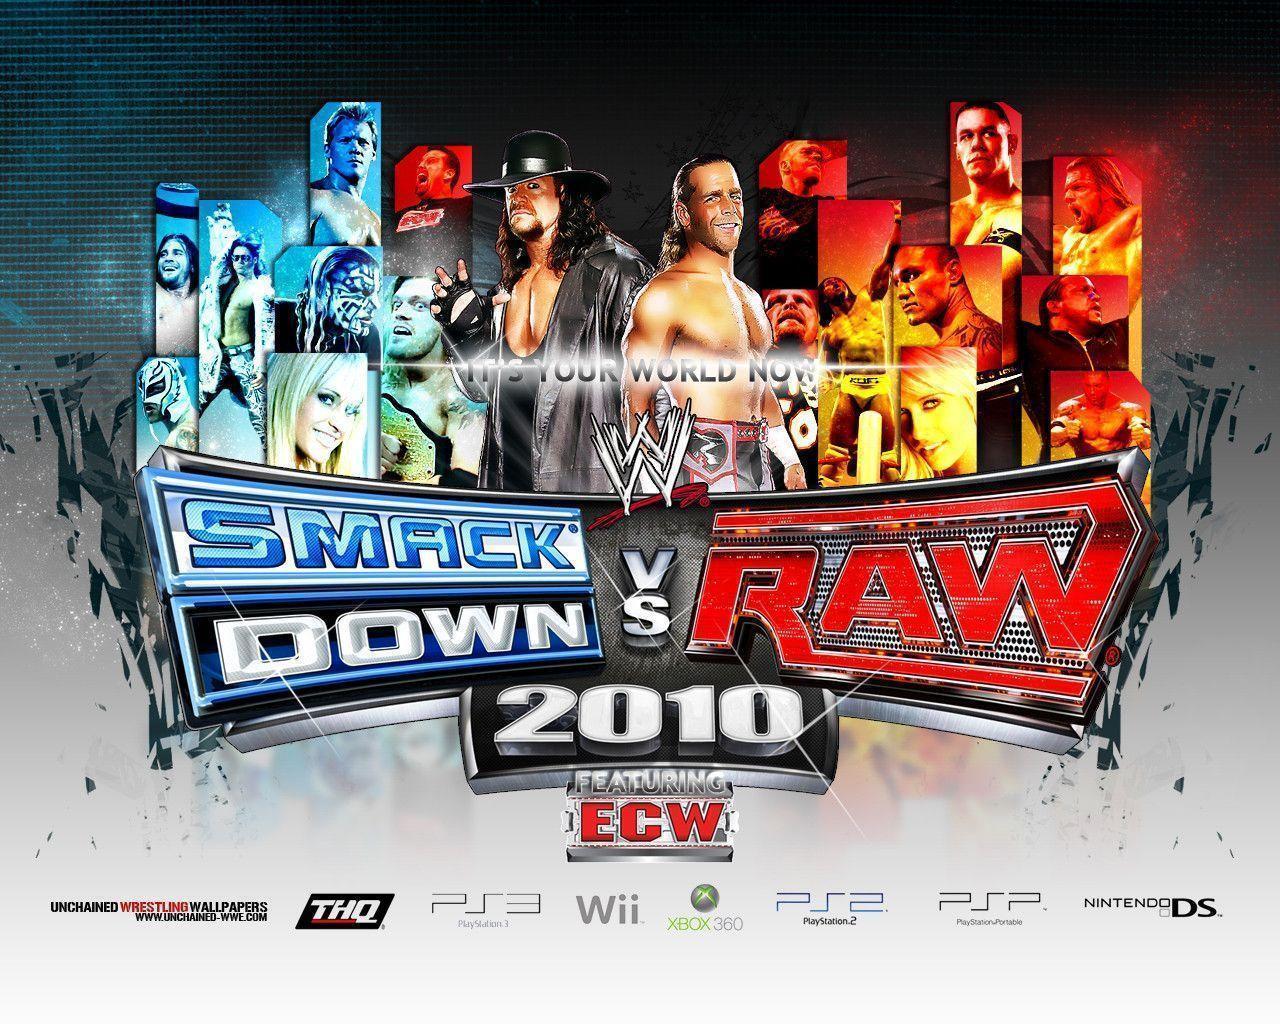 WWE SmackDown! Vs Raw 2010 Wallpaper Unchained WWE.com WWE